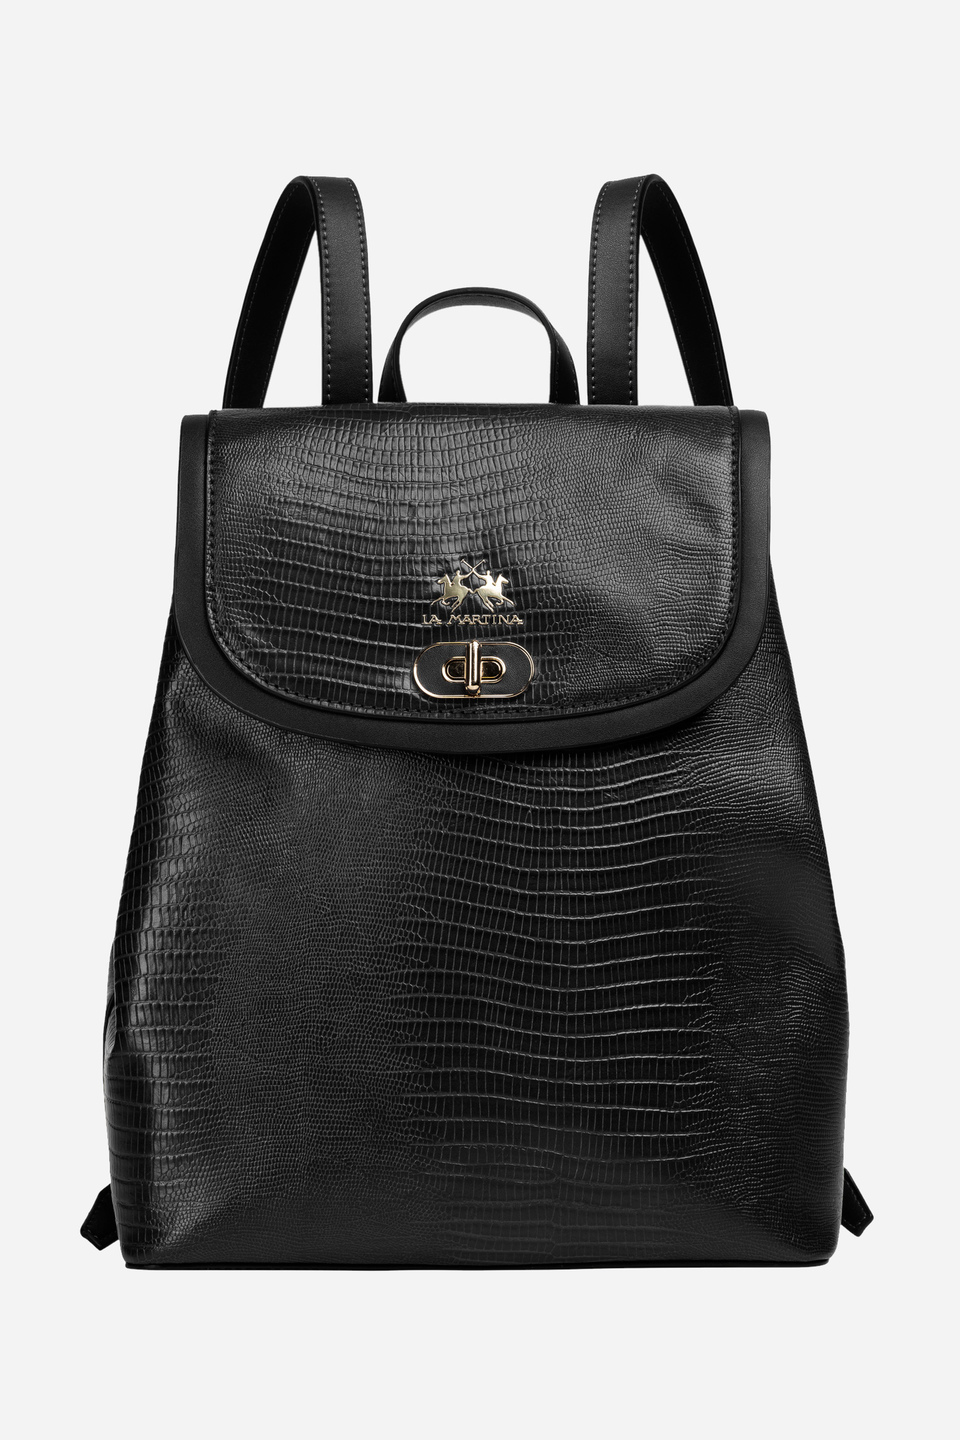 Backpack solid color fabric pu - Mireia | La Martina - Official Online Shop